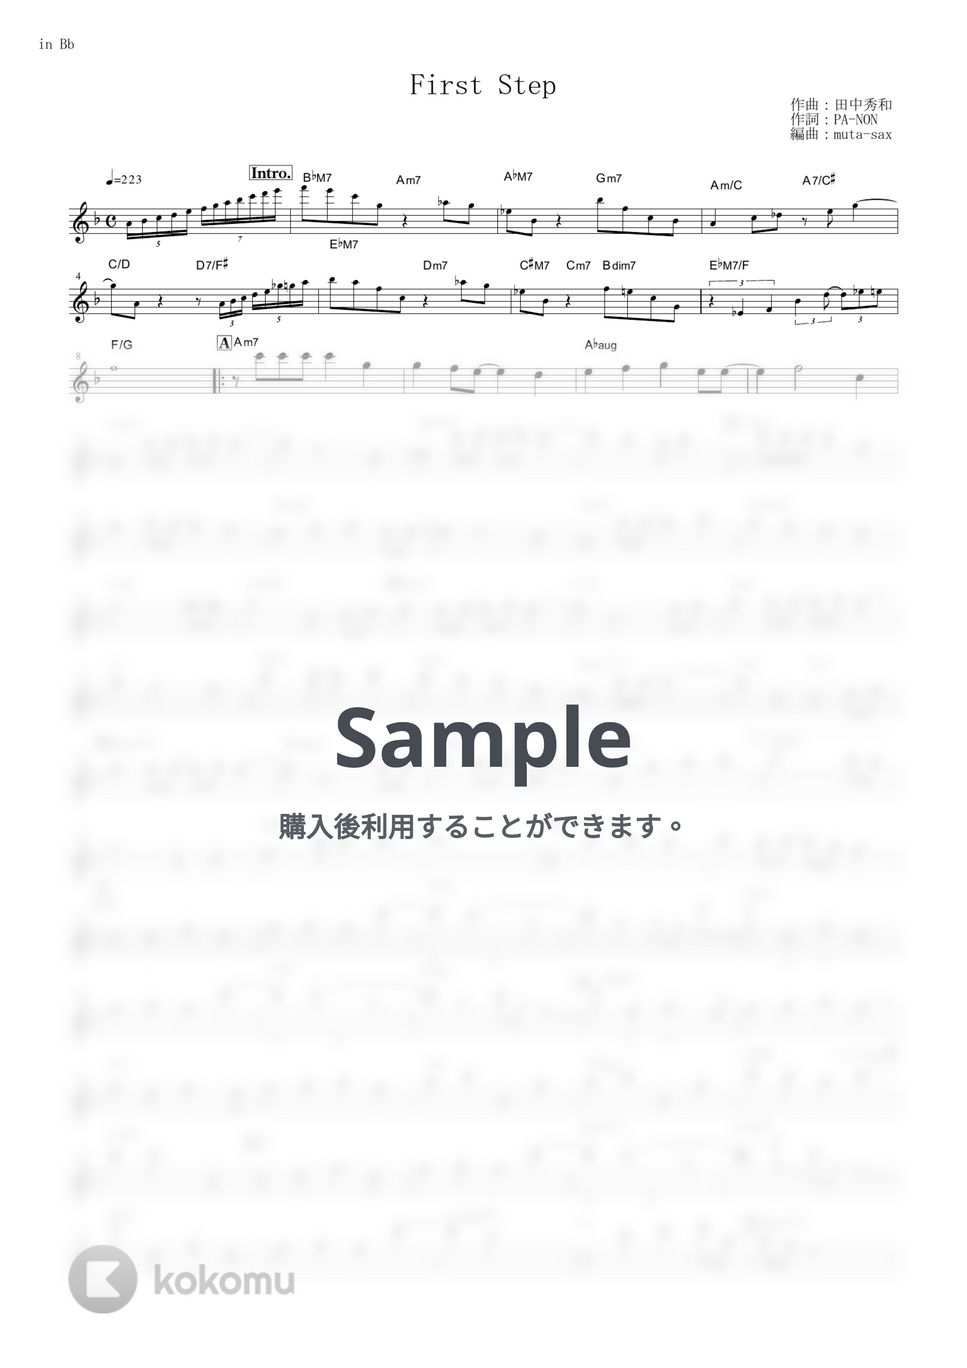 長瀬麻奈（CV:神田沙也加） - First Step (『IDOLY PRIDE』 / in Bb) by muta-sax